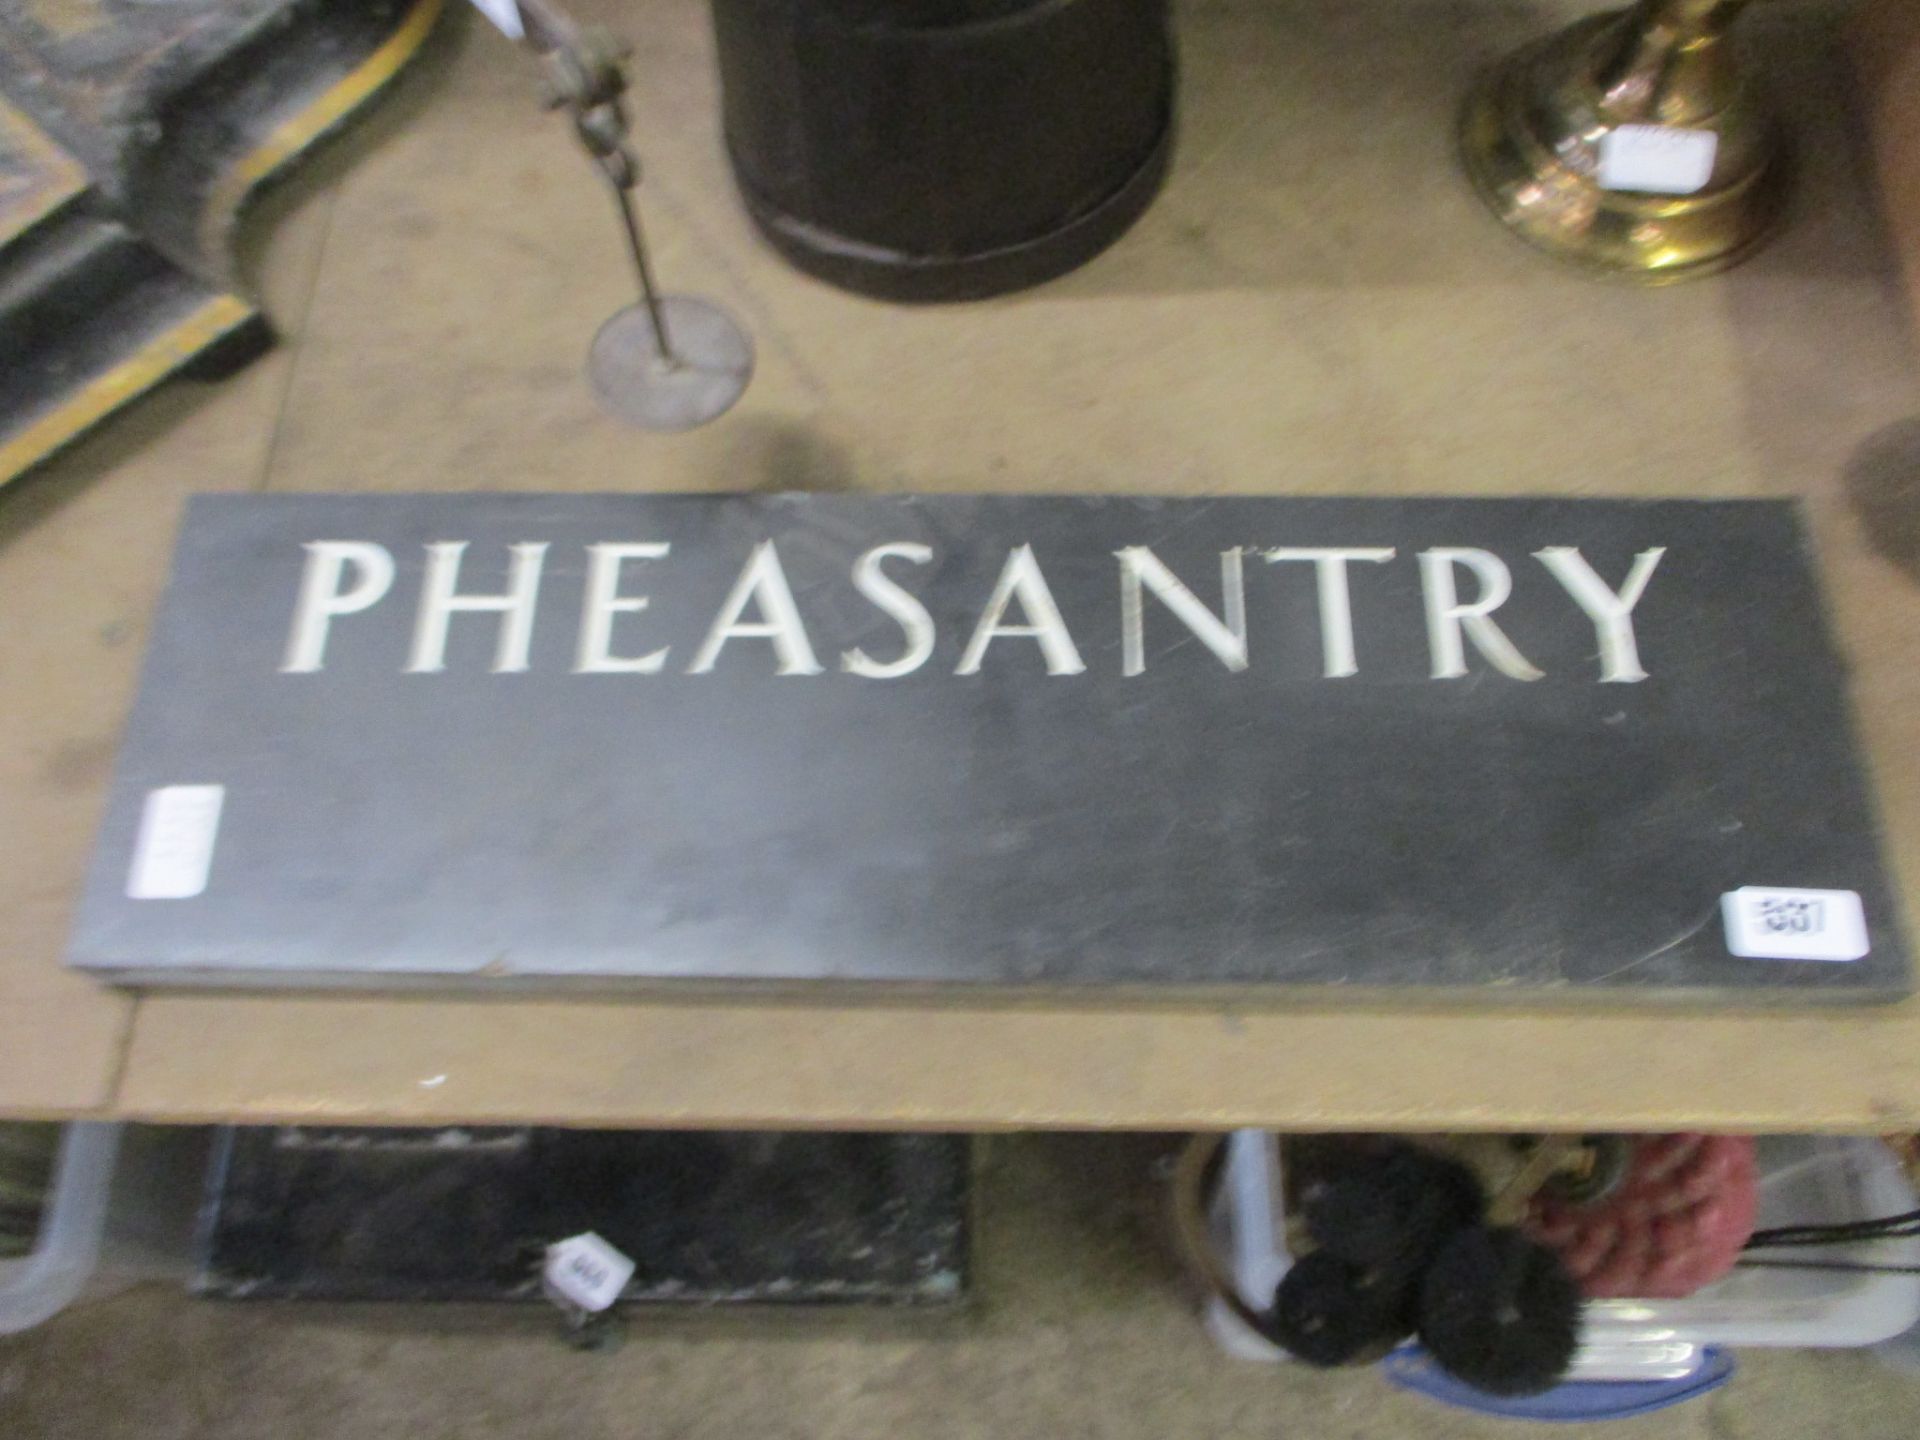 Slate 'PHEASANTRY' sign